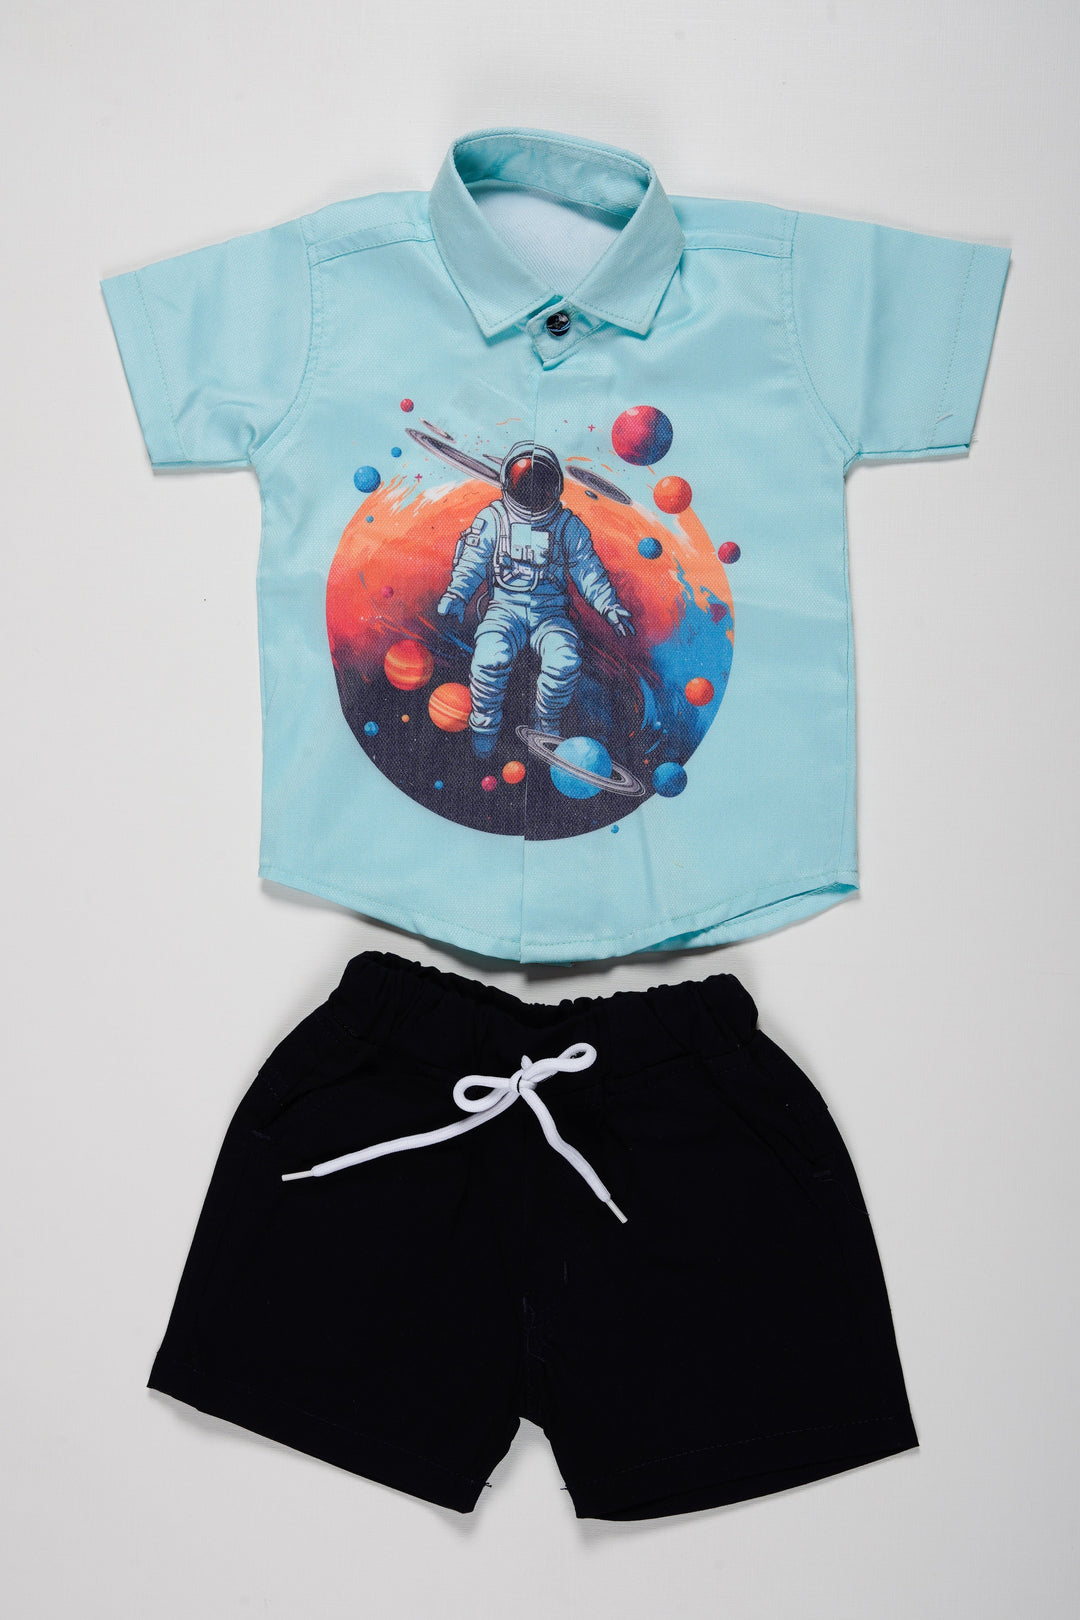 The Nesavu Boys Casual Set Boys Space Odyssey Shirt and Shorts Set | Cosmic Exploration Outfit Nesavu 16 (1Y) / Blue / Poly Cotton BCS035B-16 Kids Space Themed Casual Wear Set | Boys Astronaut Print Shirt and Shorts | The Nesavu